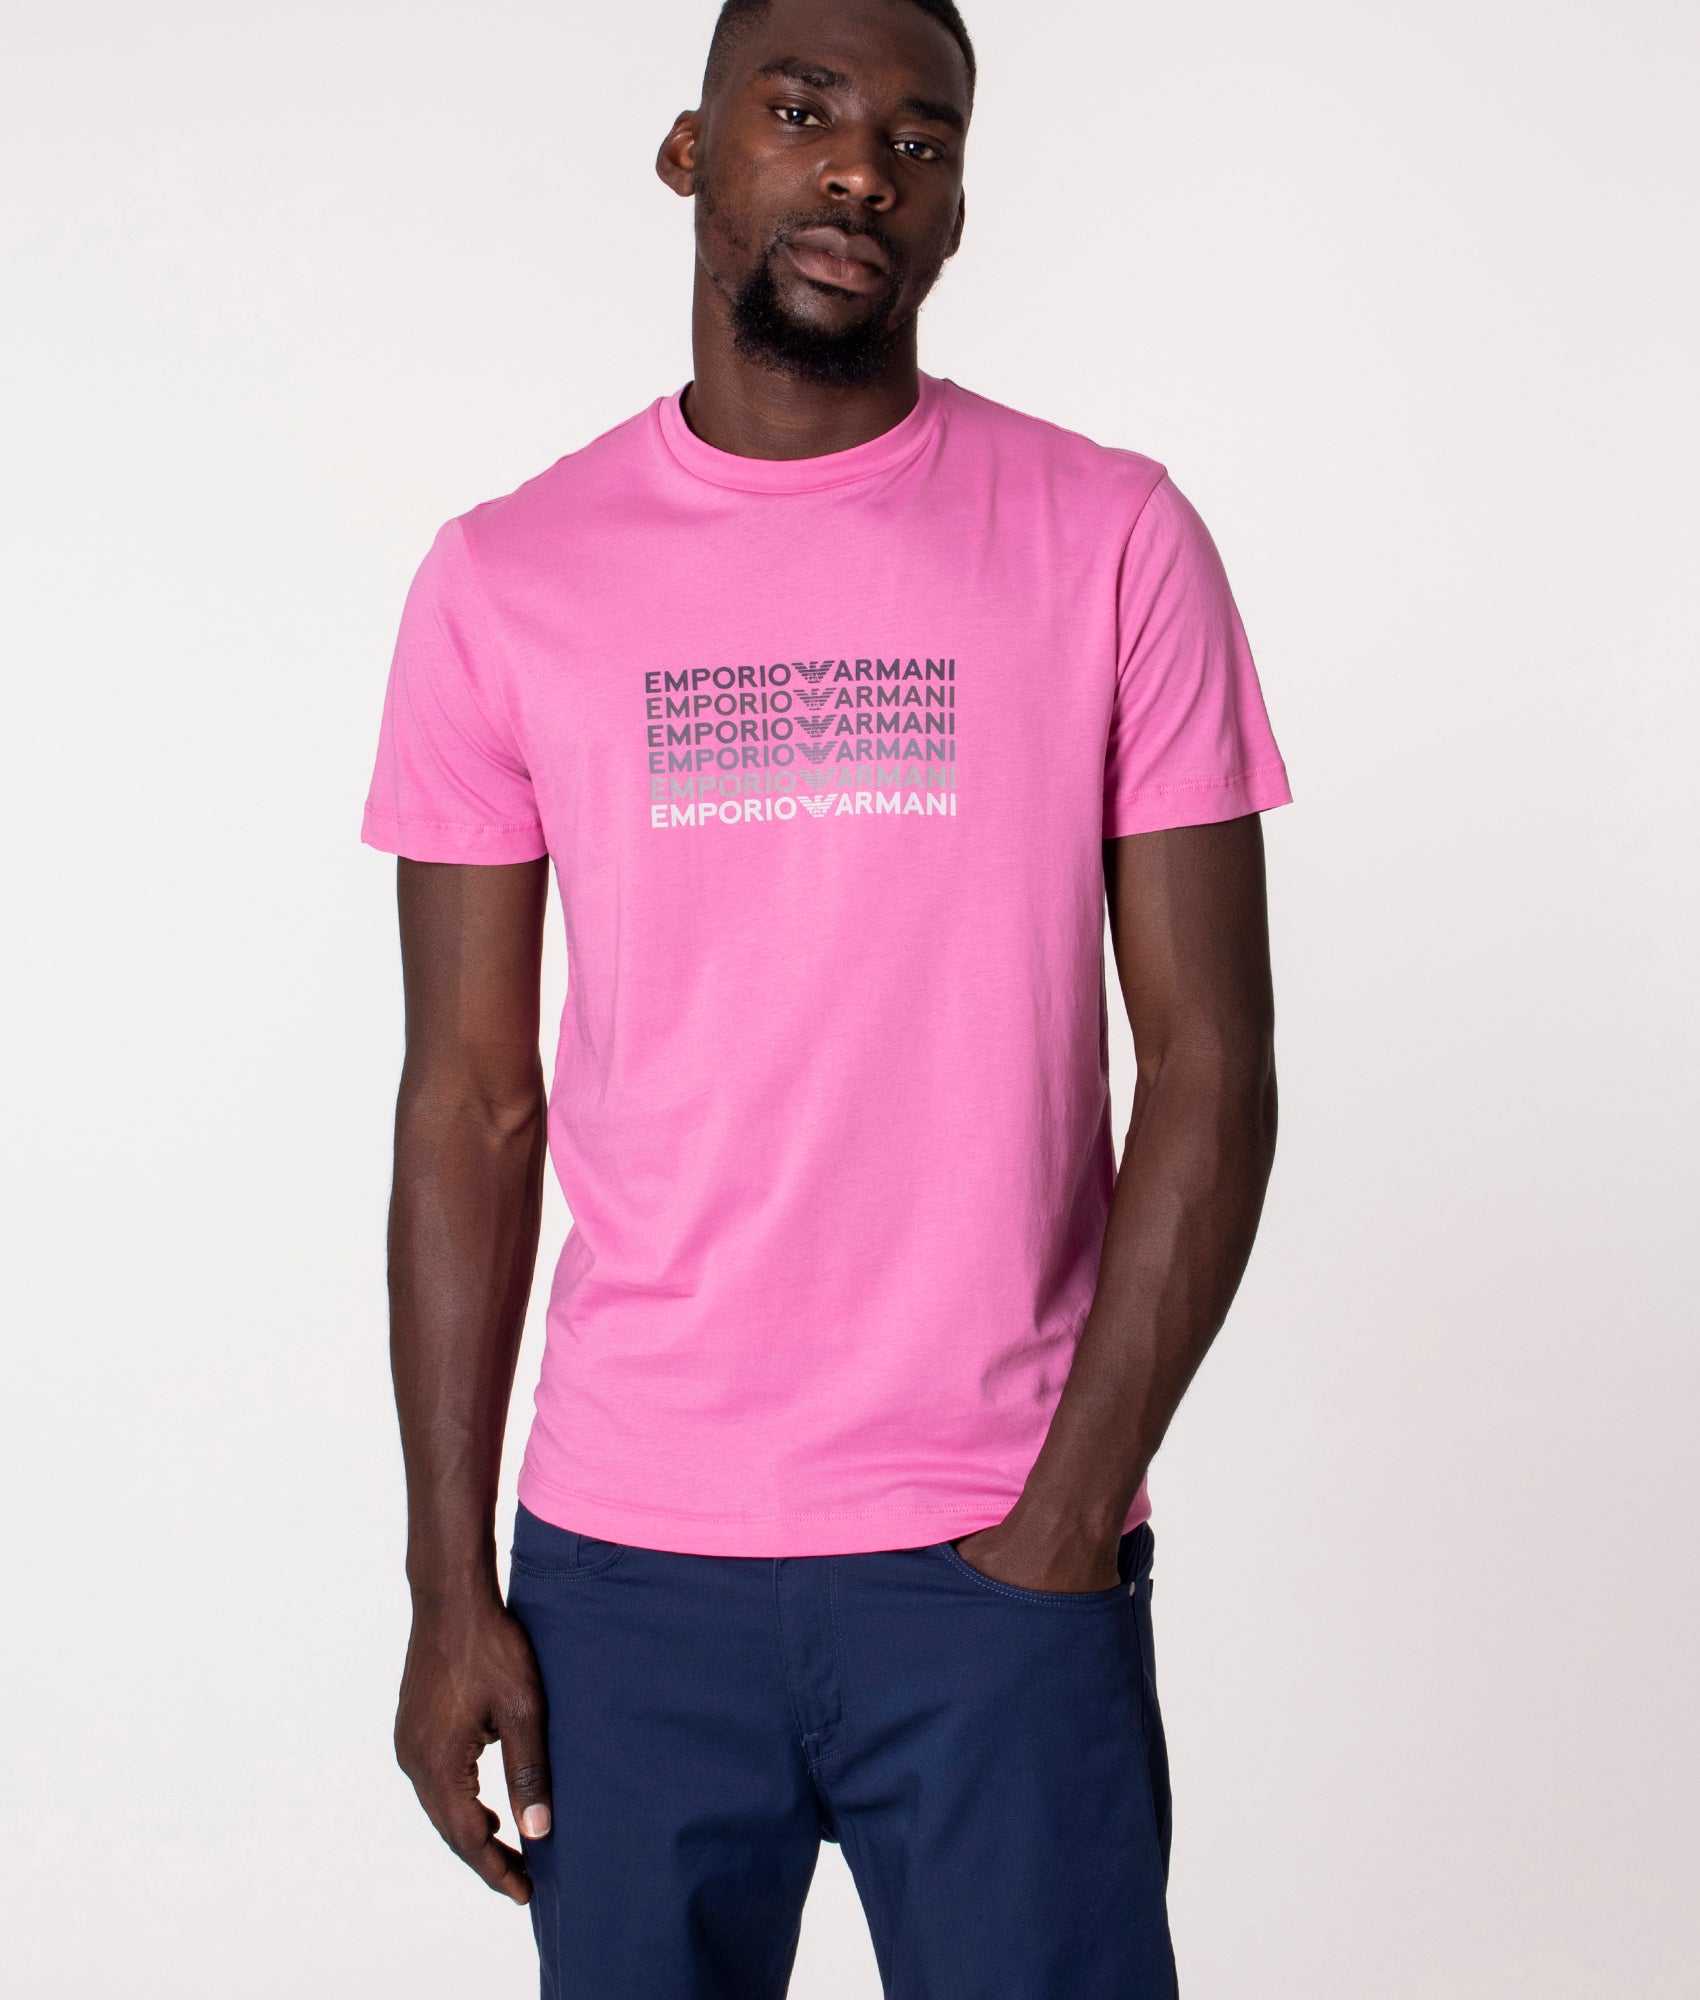 Top 70+ imagen pink armani t shirt